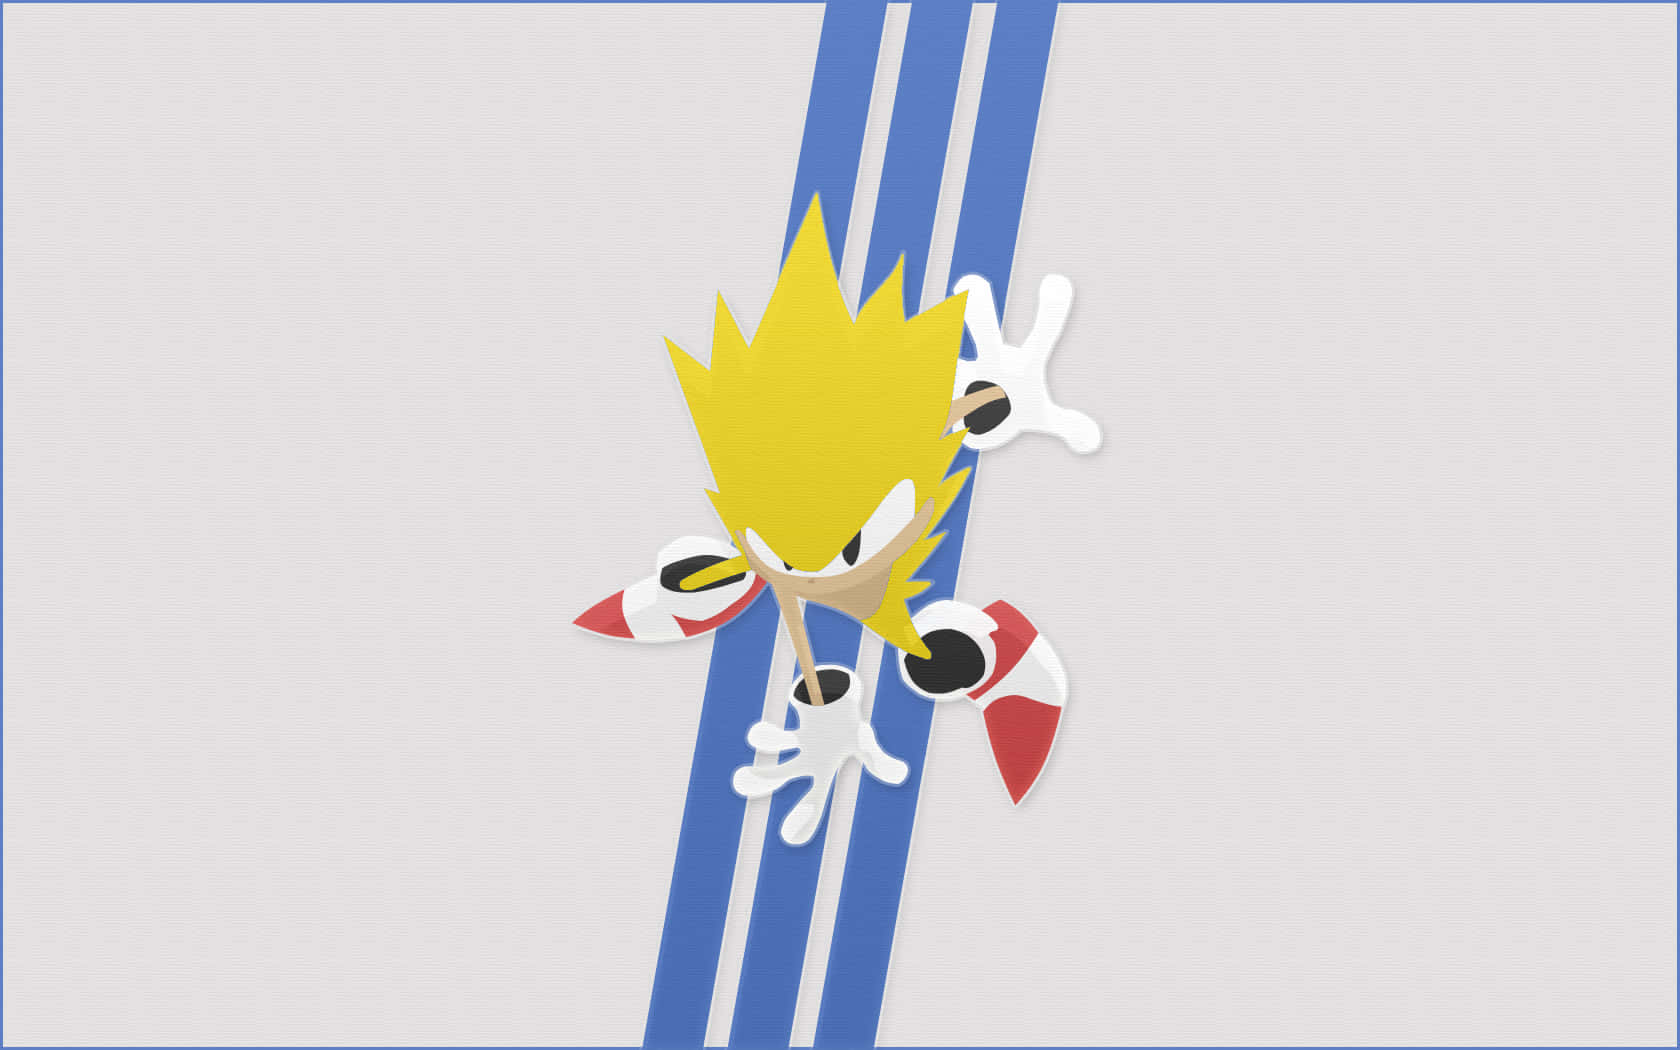 Sonic The Hedgehog Wallpaper Wallpaper